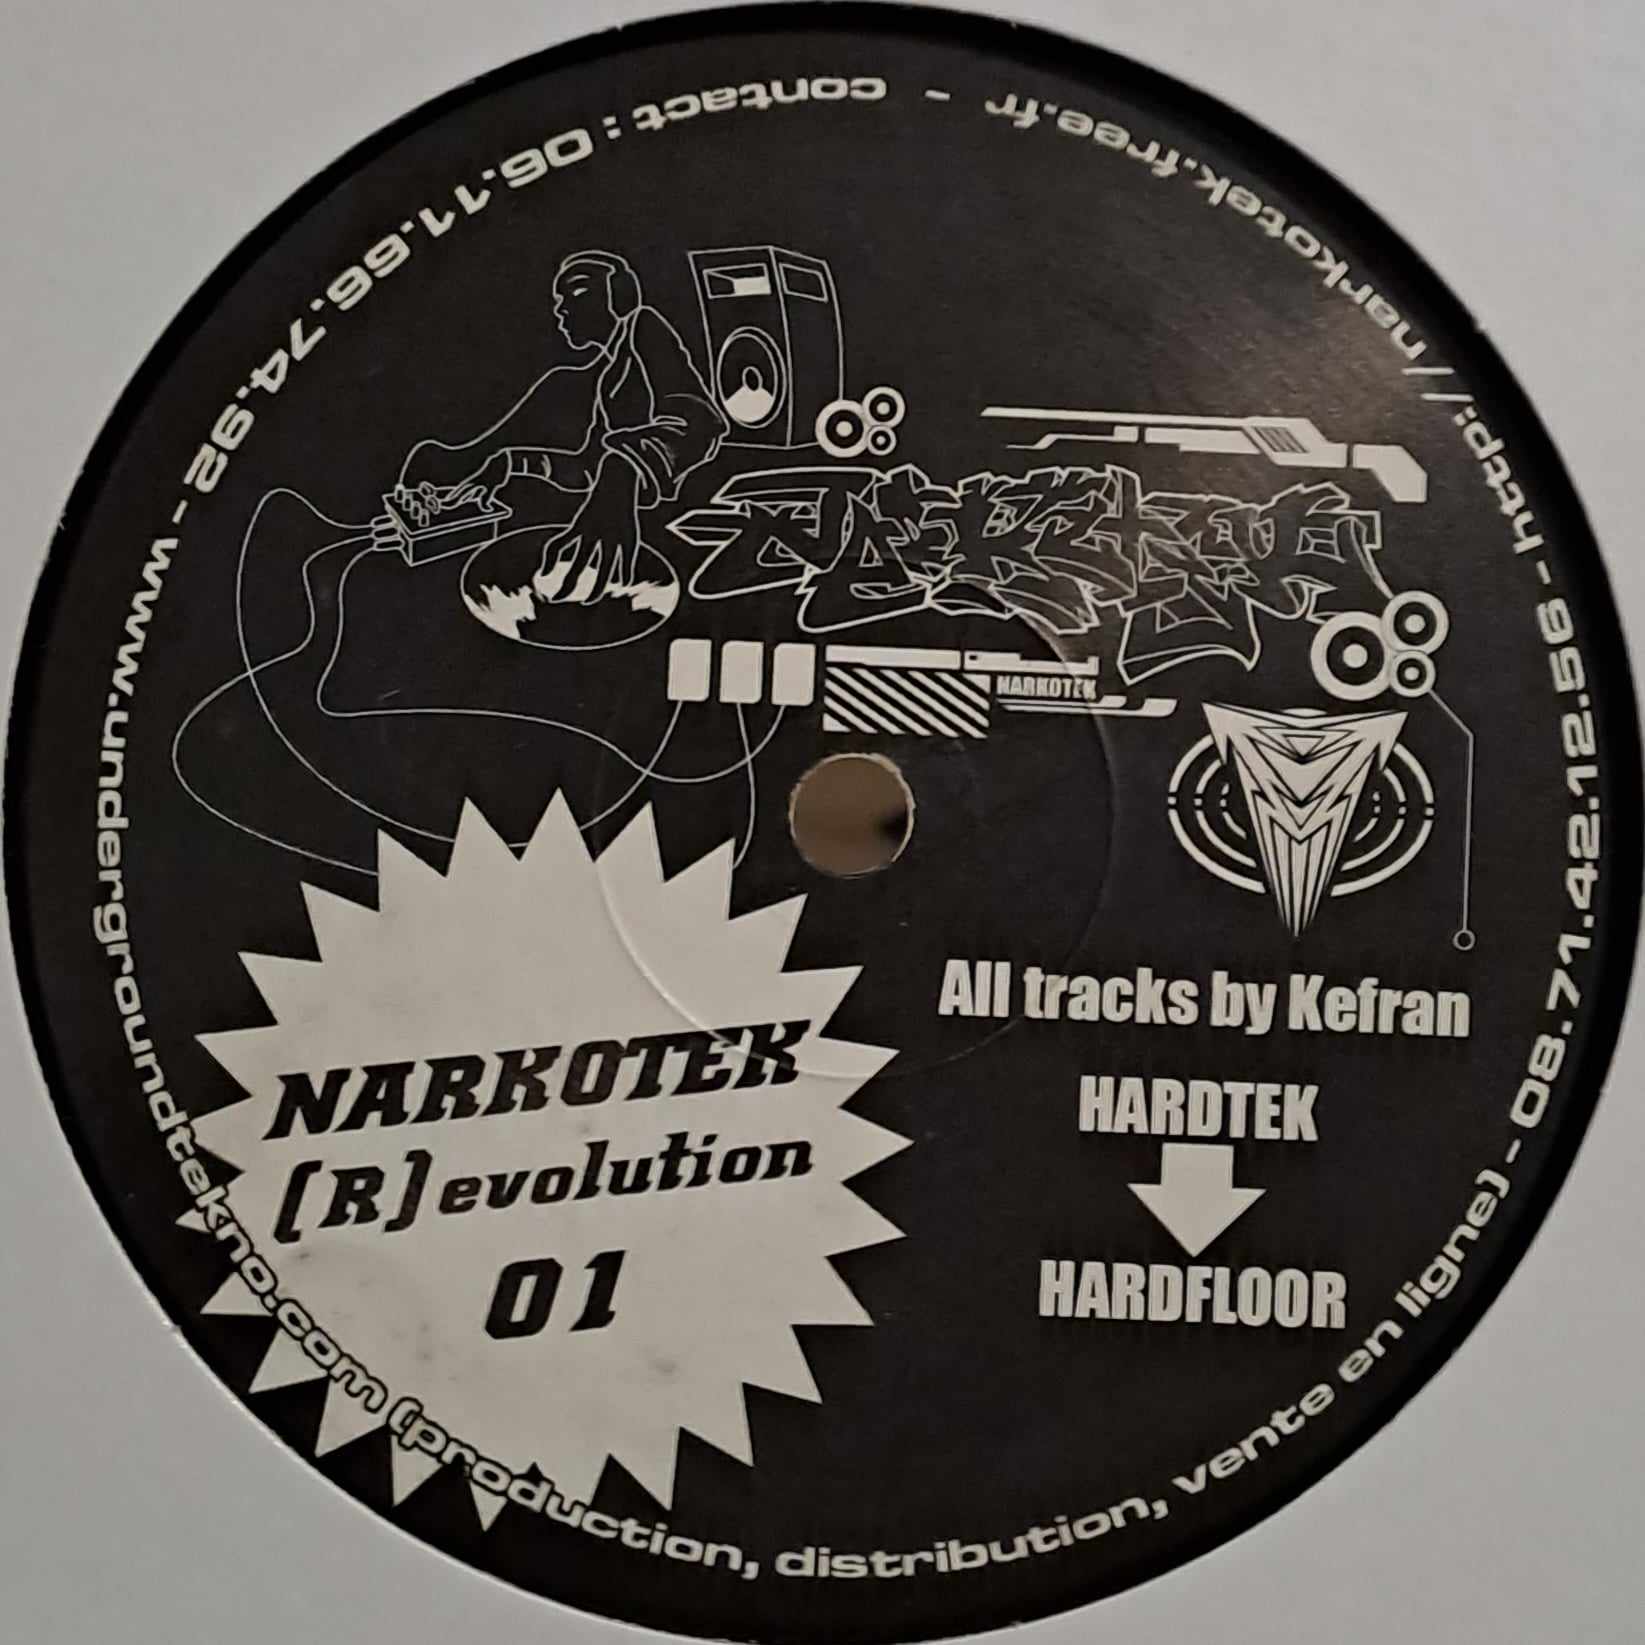 Narkotek [R]evolution 01 - vinyle freetekno